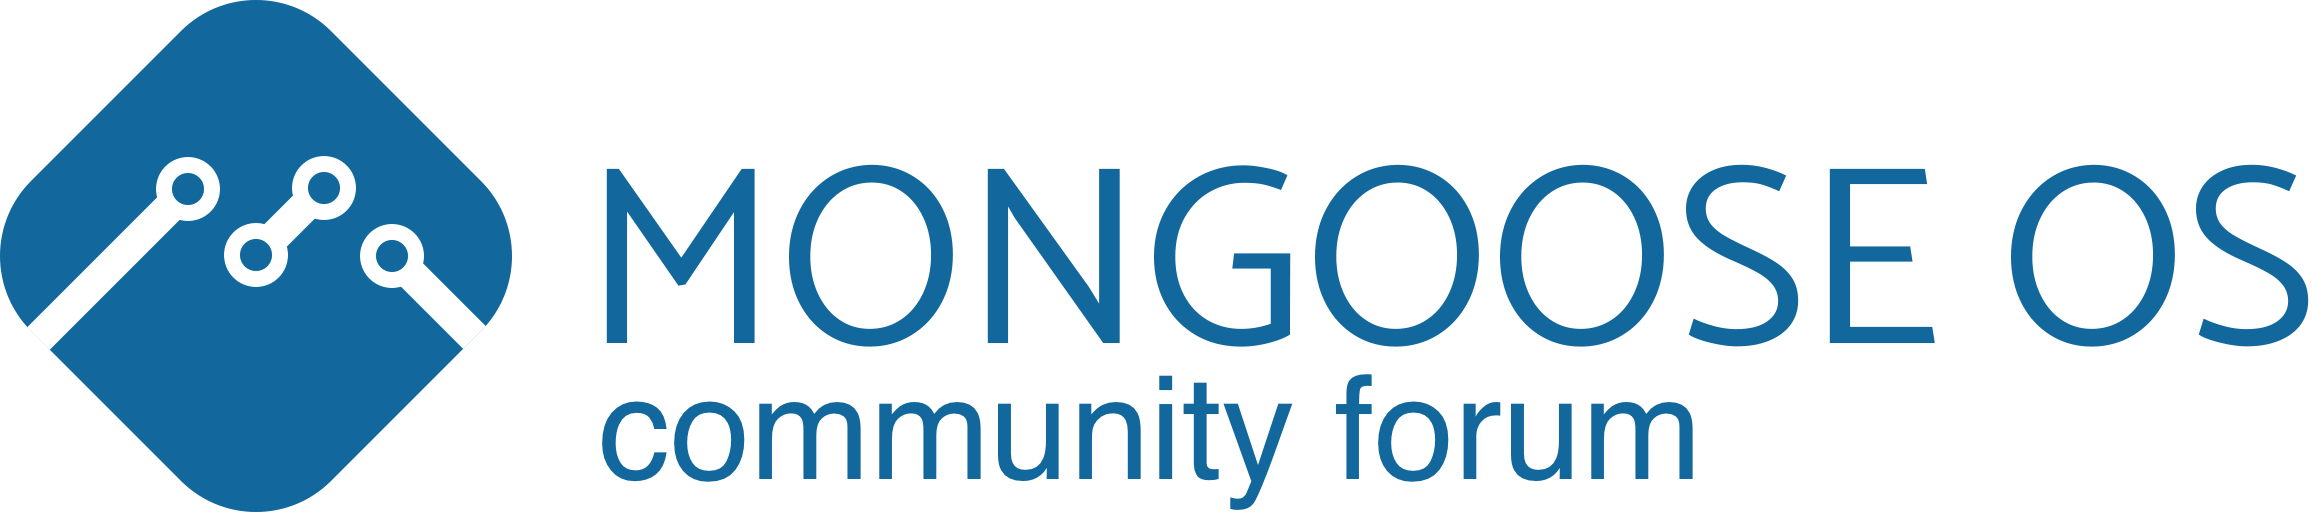 Mongoose OS community forum